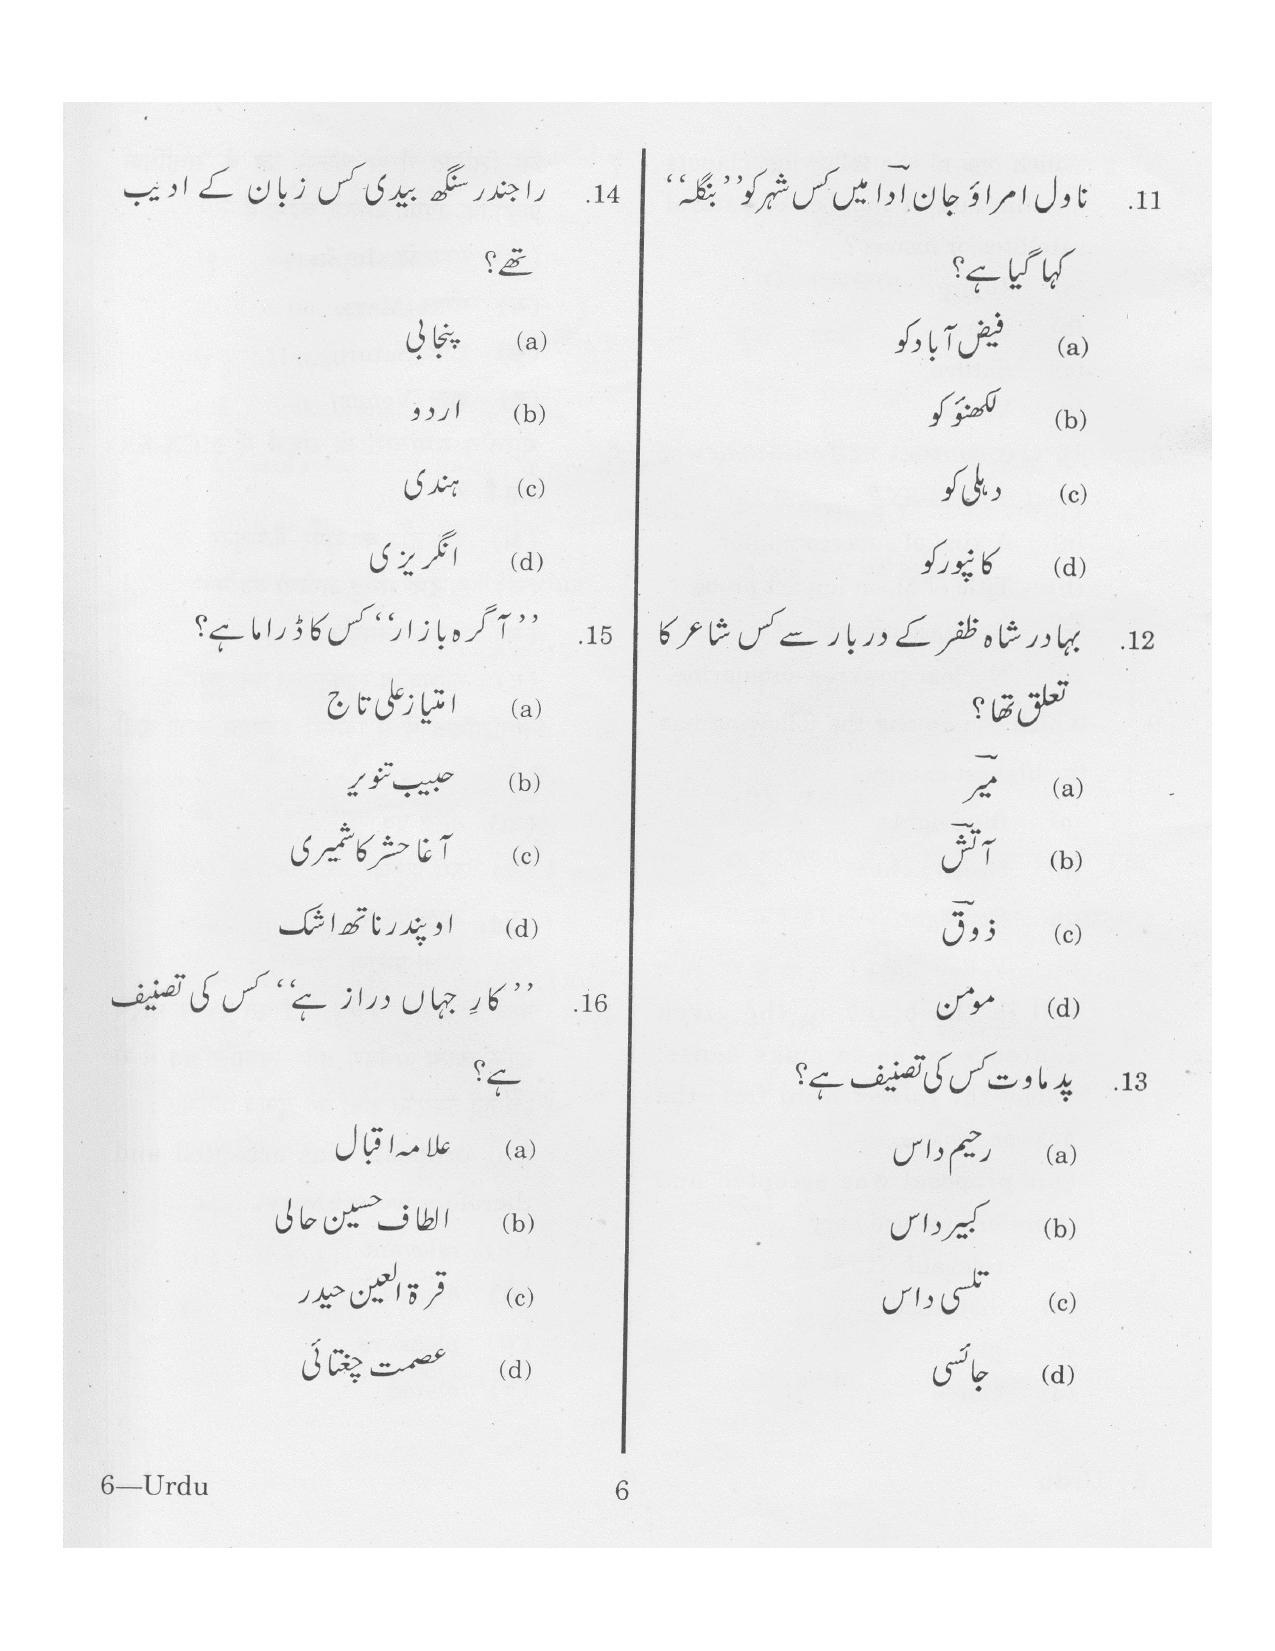 URATPG Urdu 2013 Question Paper - Page 5